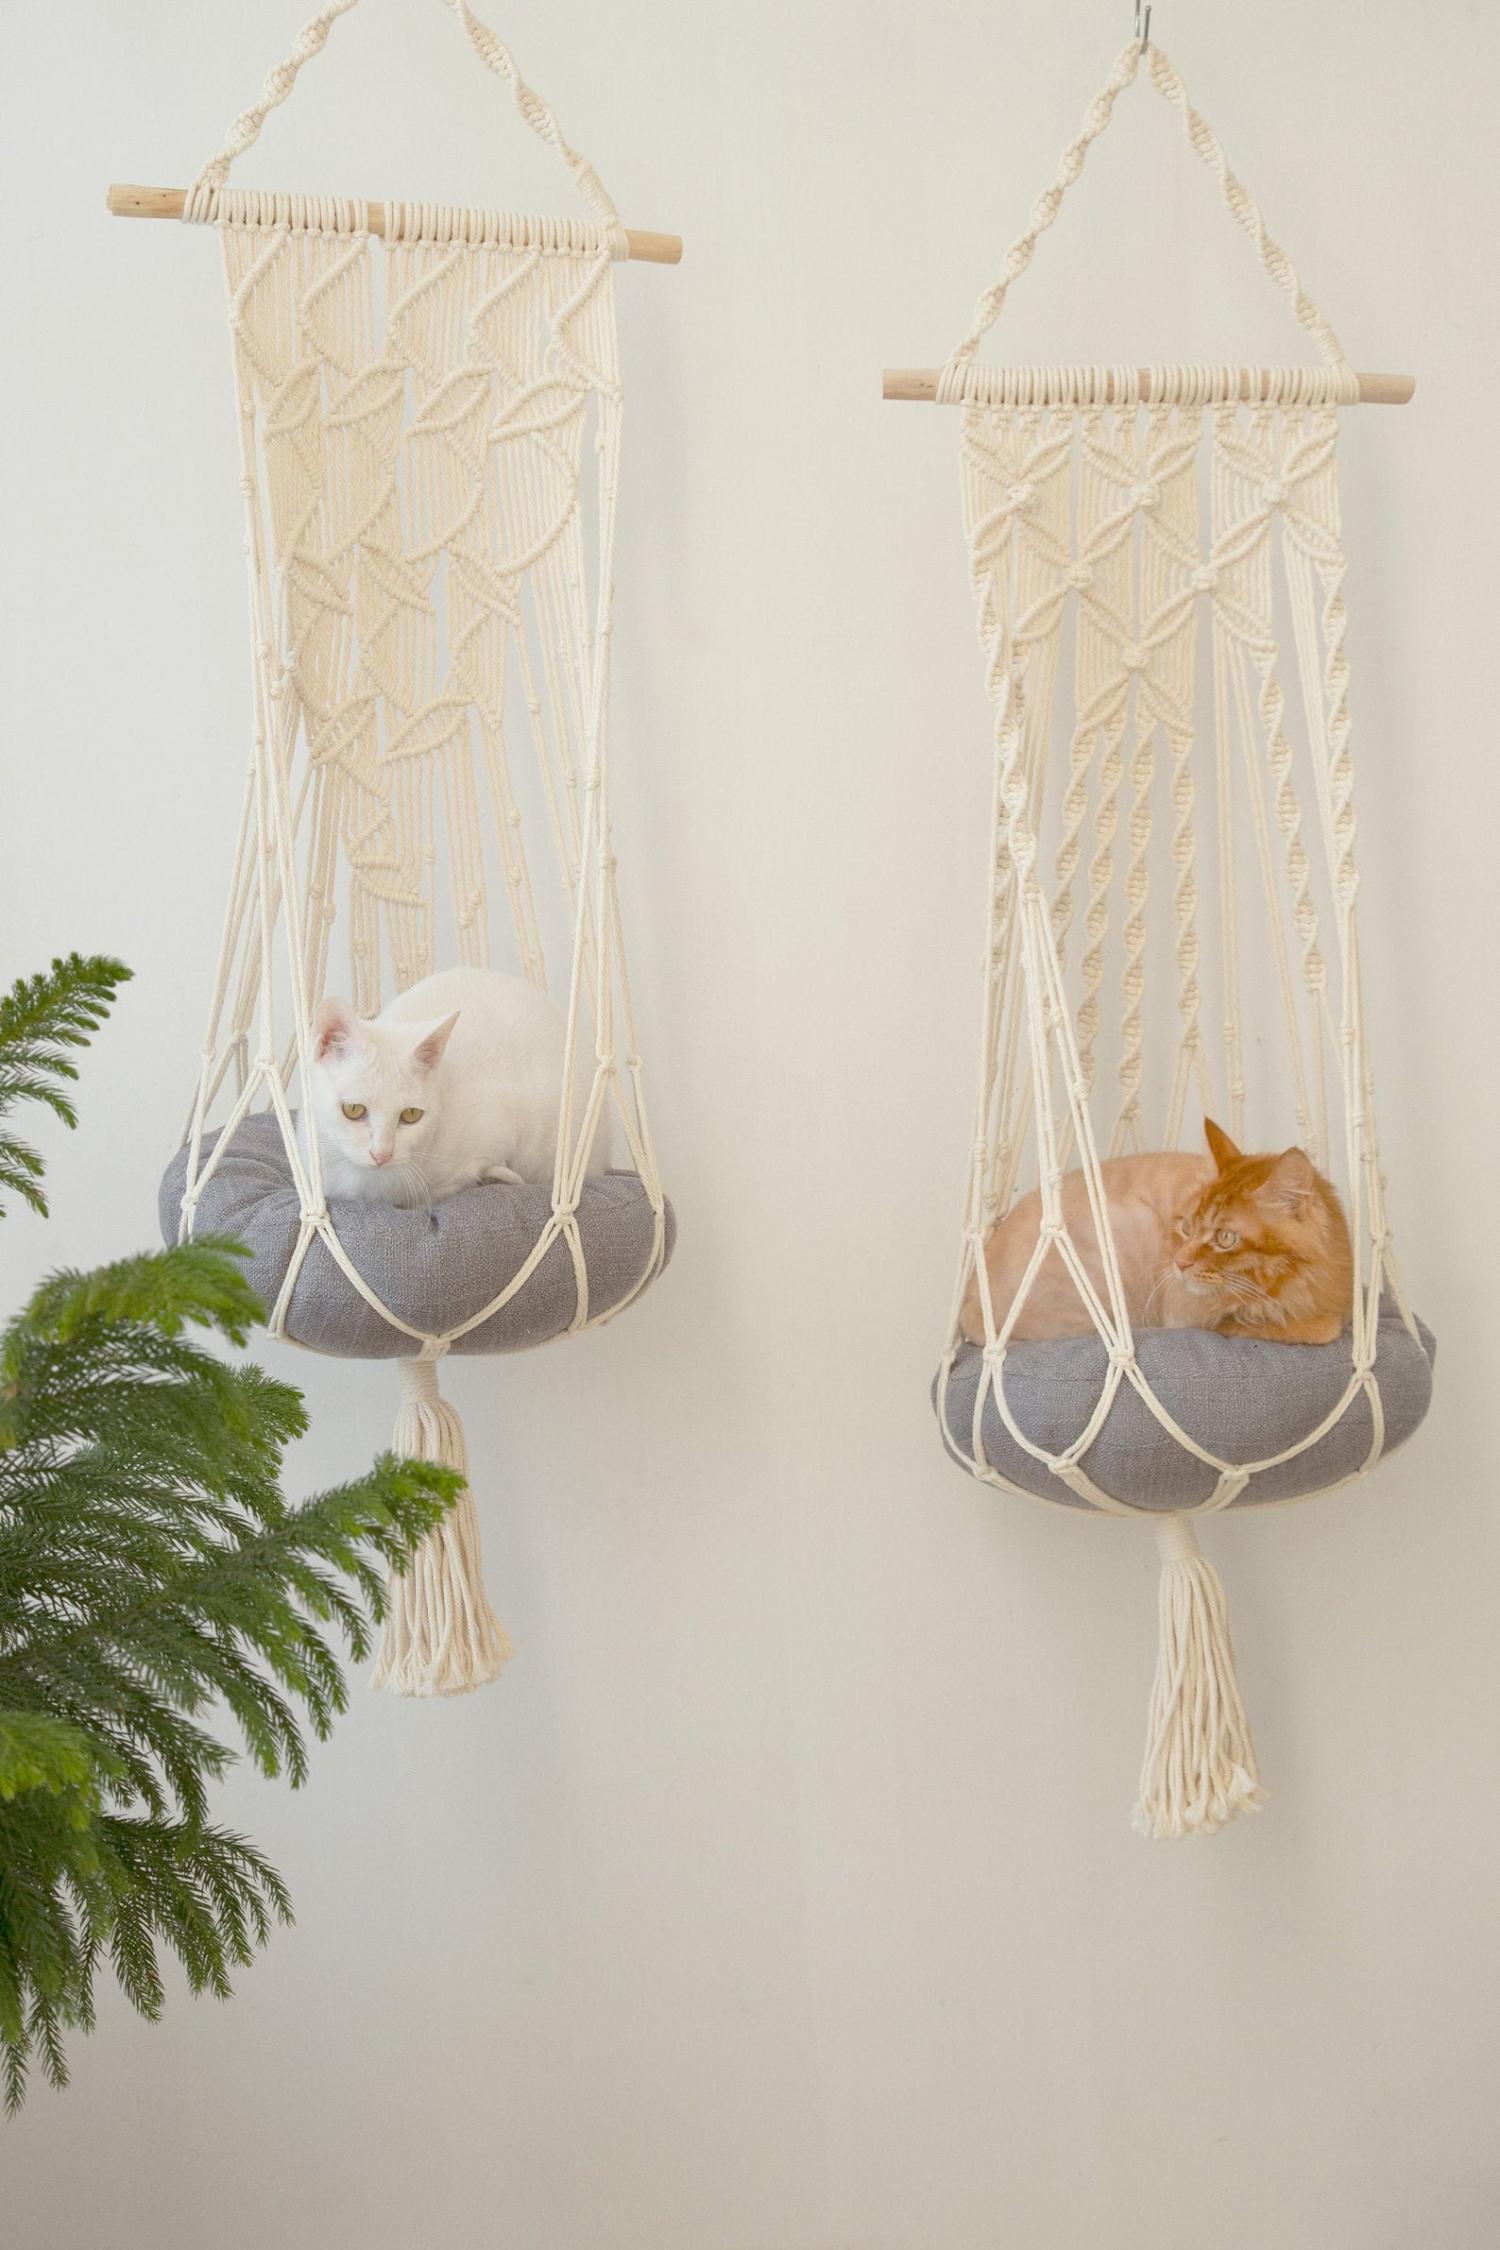 Hanging Cat Hammock - Swinging Macrame cat bed